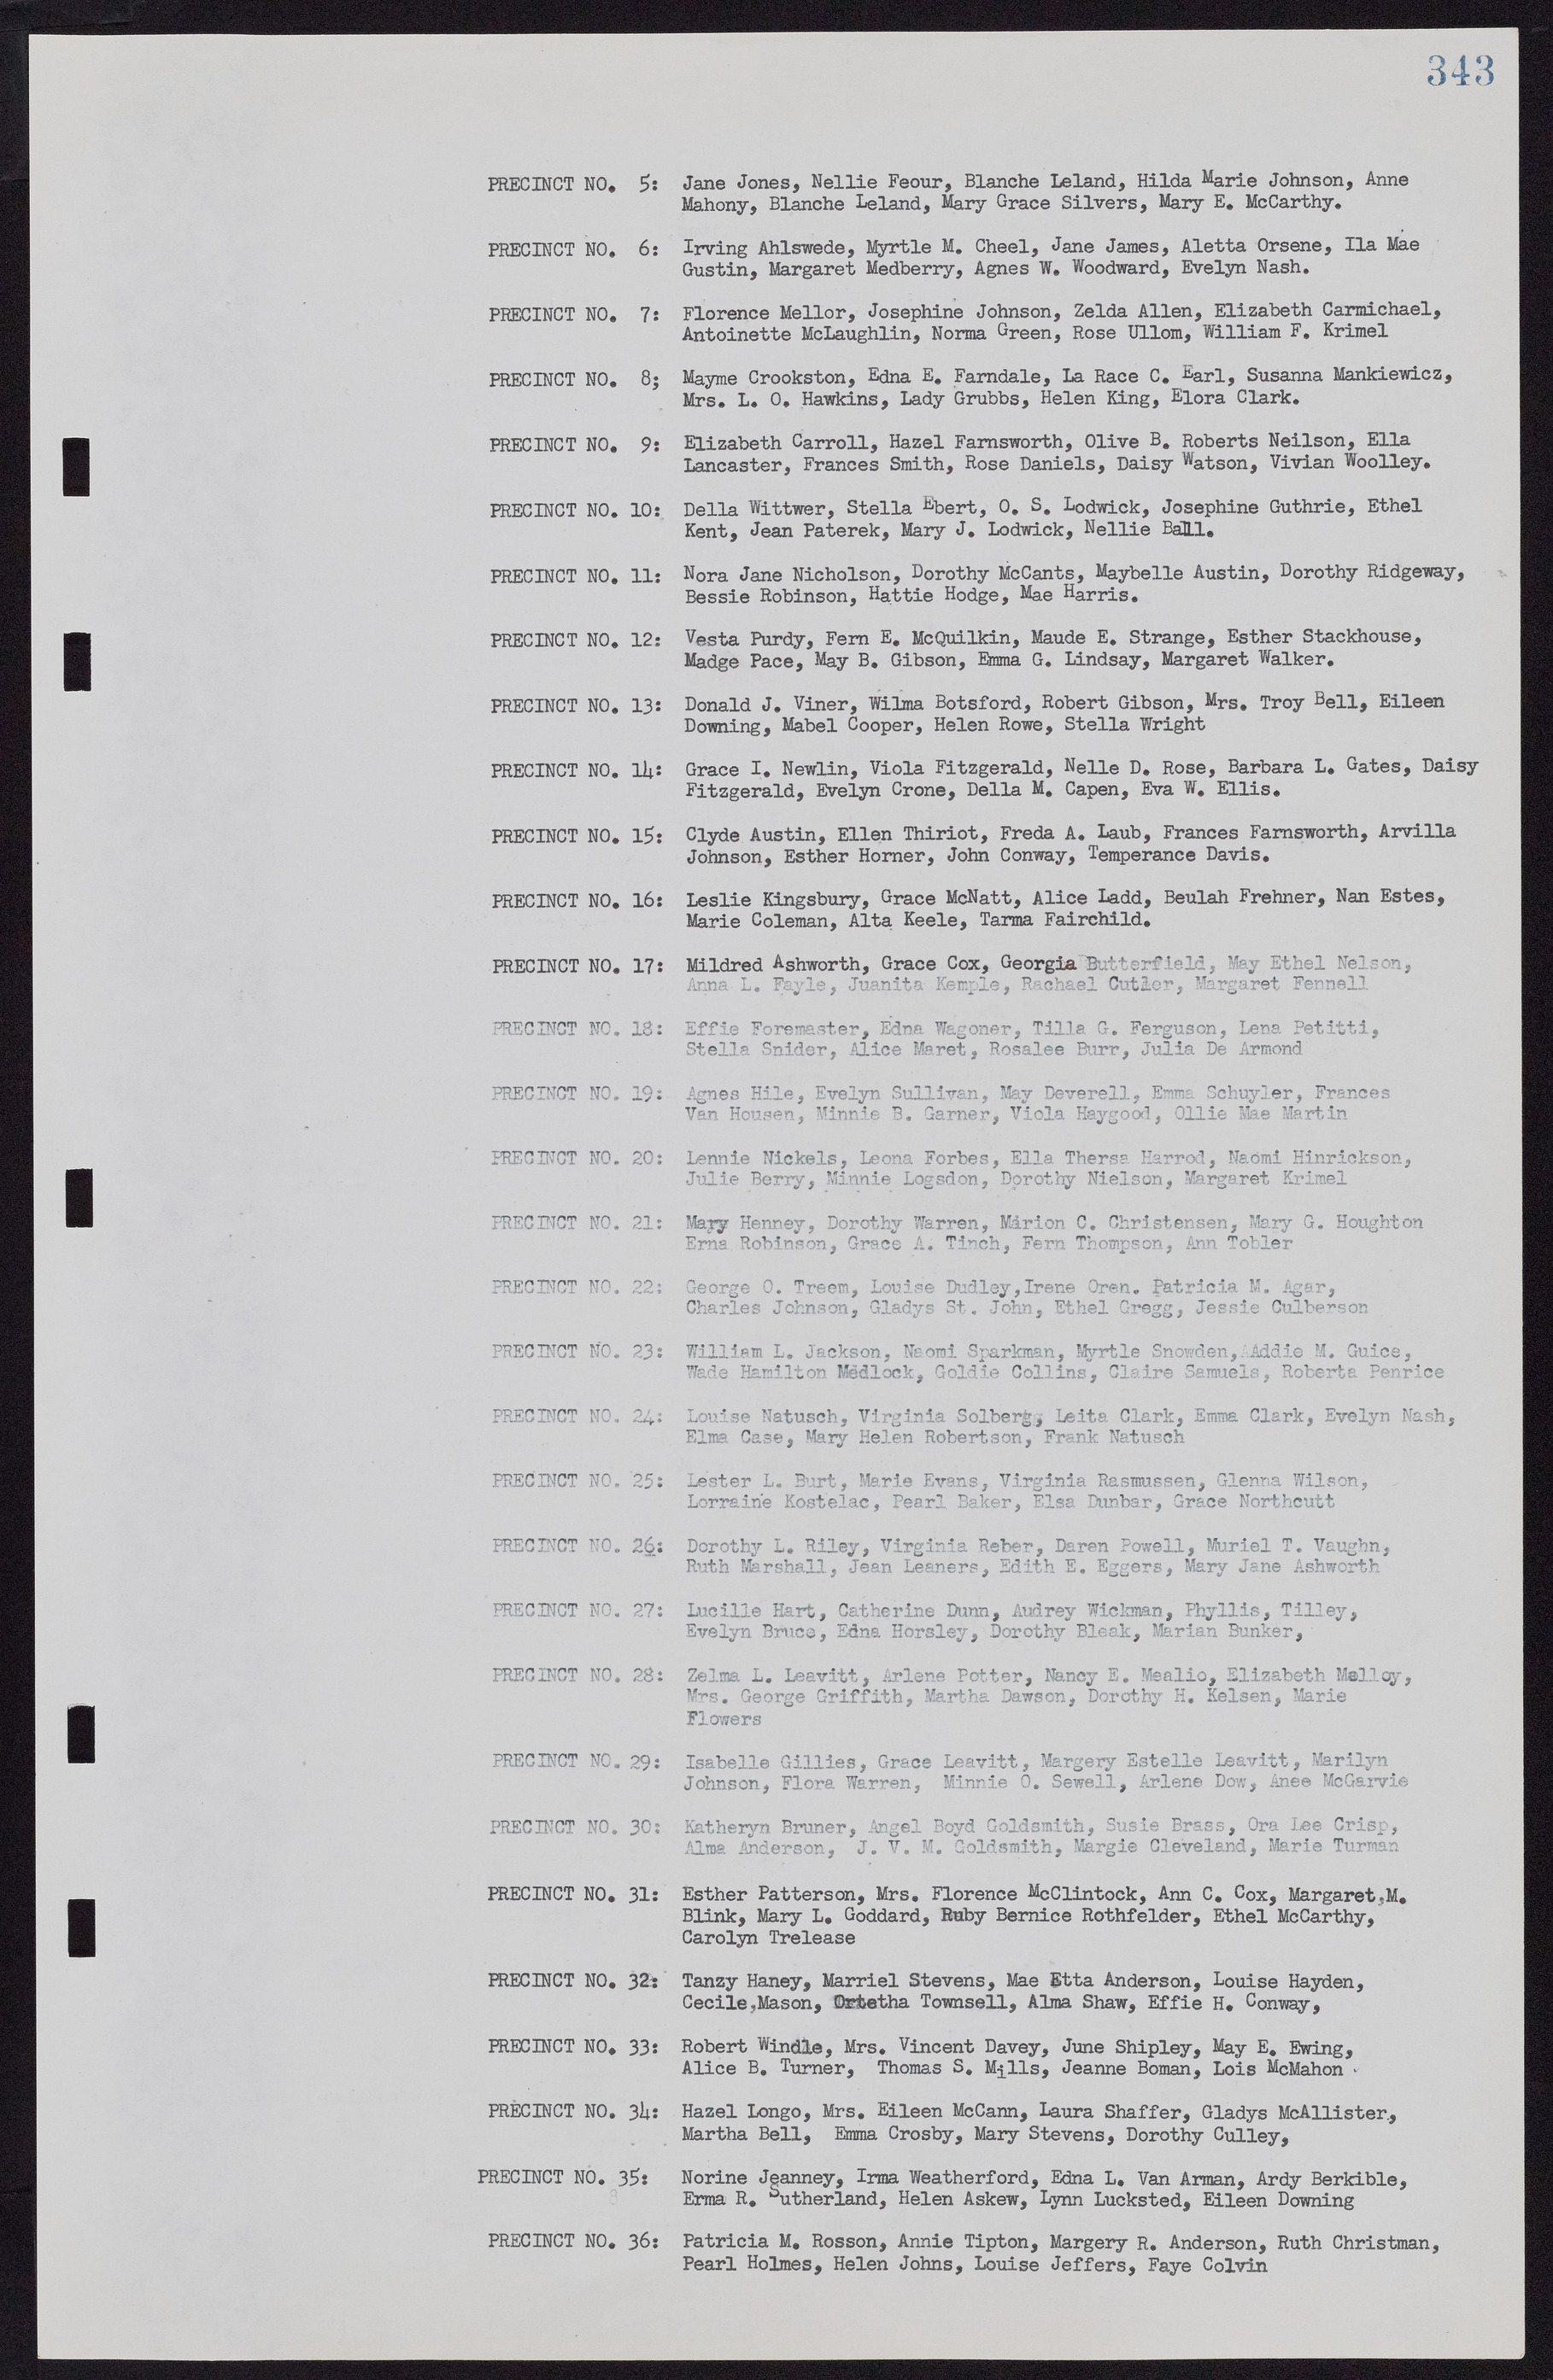 Las Vegas City Commission Minutes, November 7, 1949 to May 21, 1952, lvc000007-355